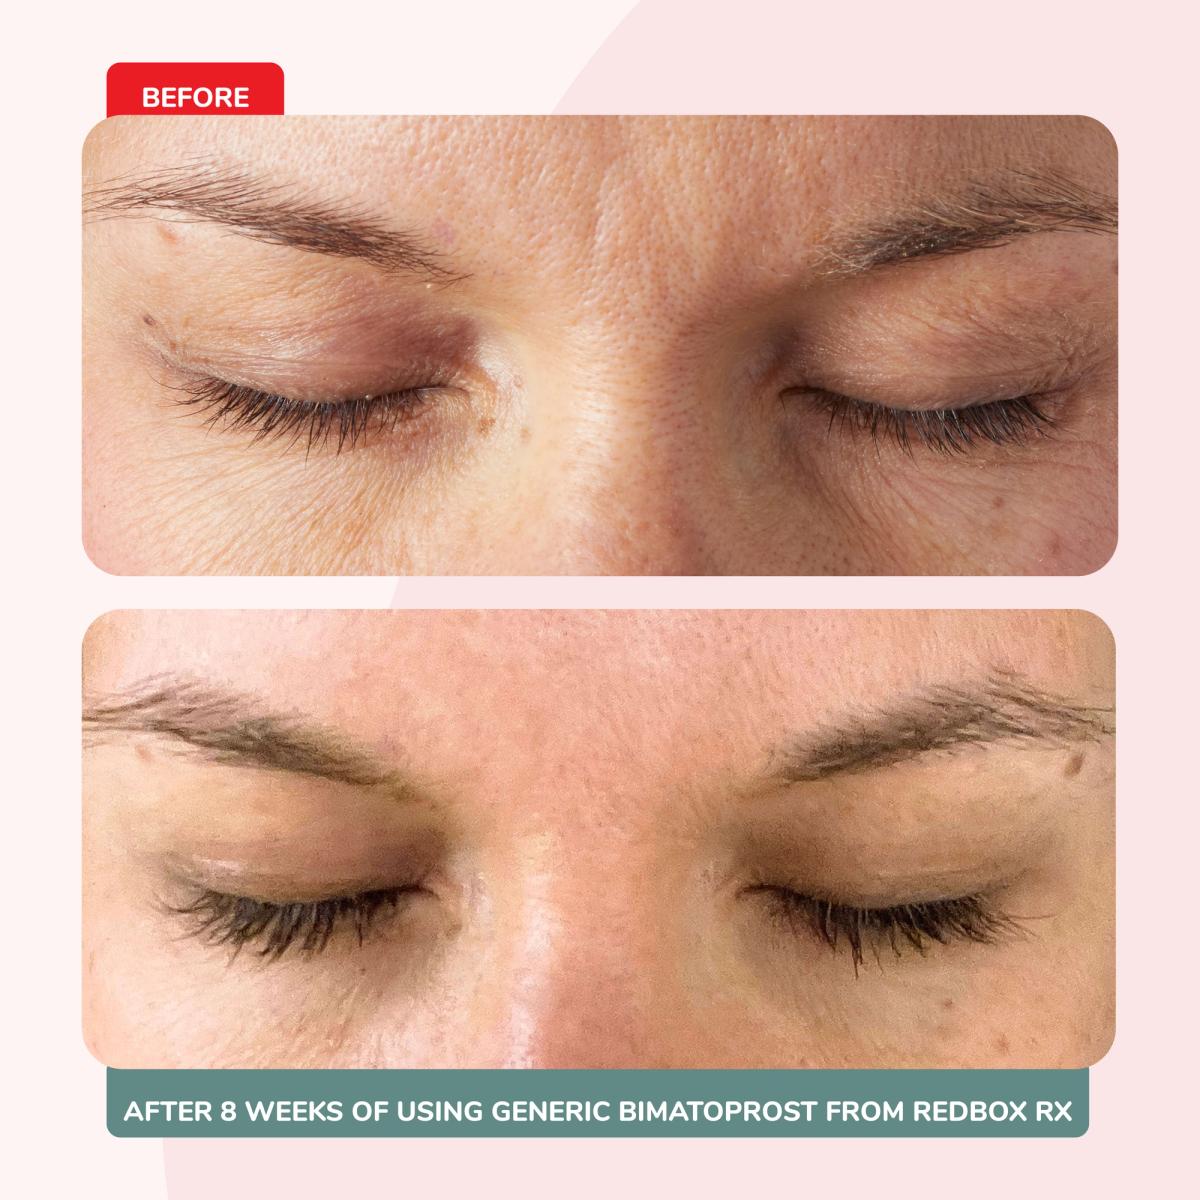 Bimatoprost (Generic Latisse) Eyelash Serum Before and After Photo (8 Weeks)